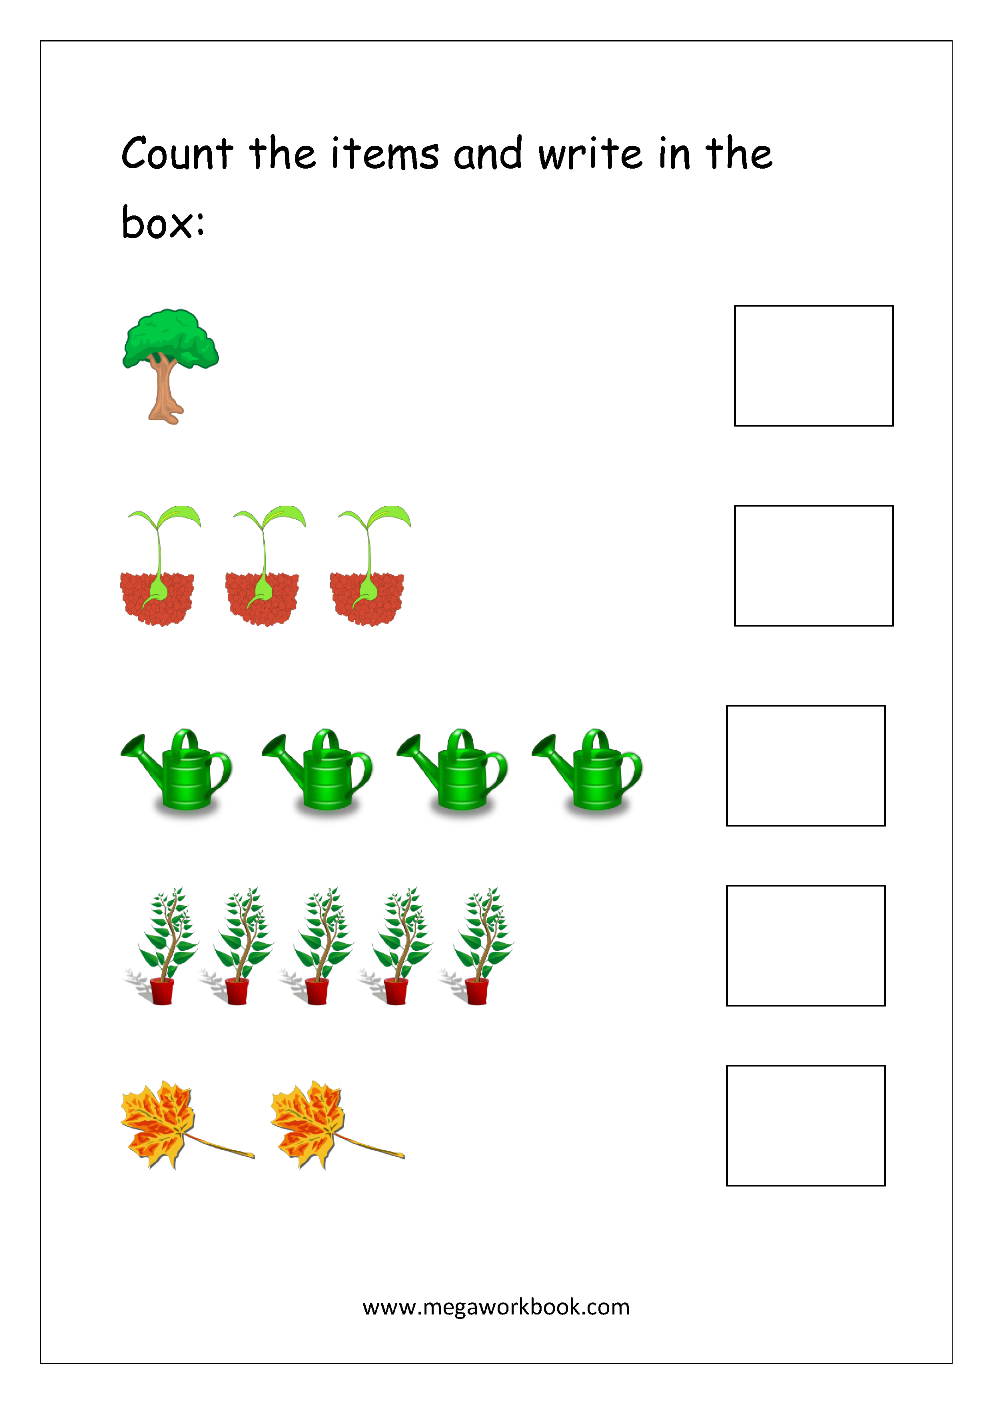 Free Printable Worksheets for Preschool and Kindergarten - MegaWorkbook